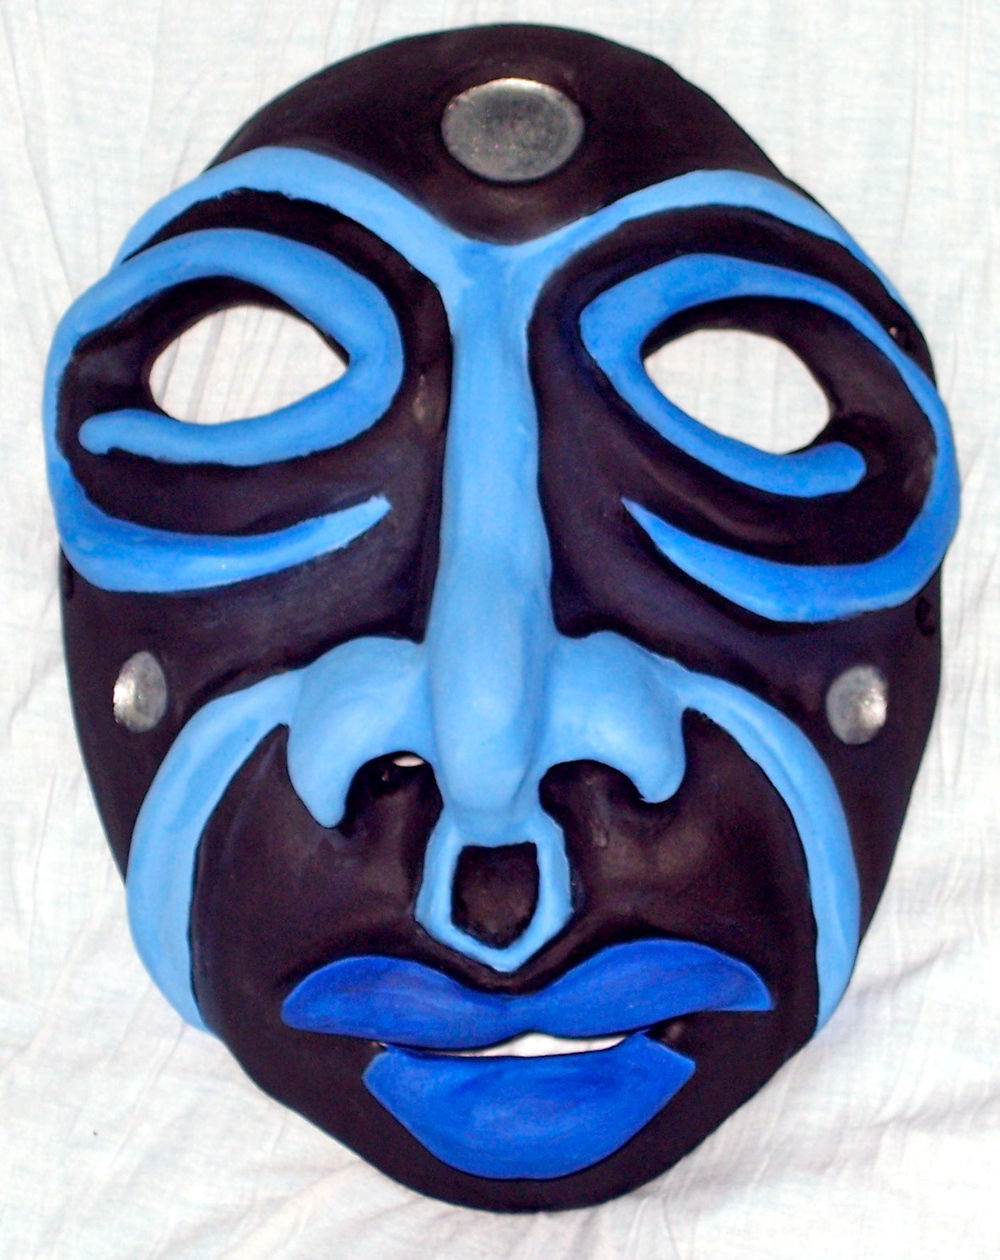 Dream Mask Face, an art print by Nicholas BrandonSumner - INPRNT